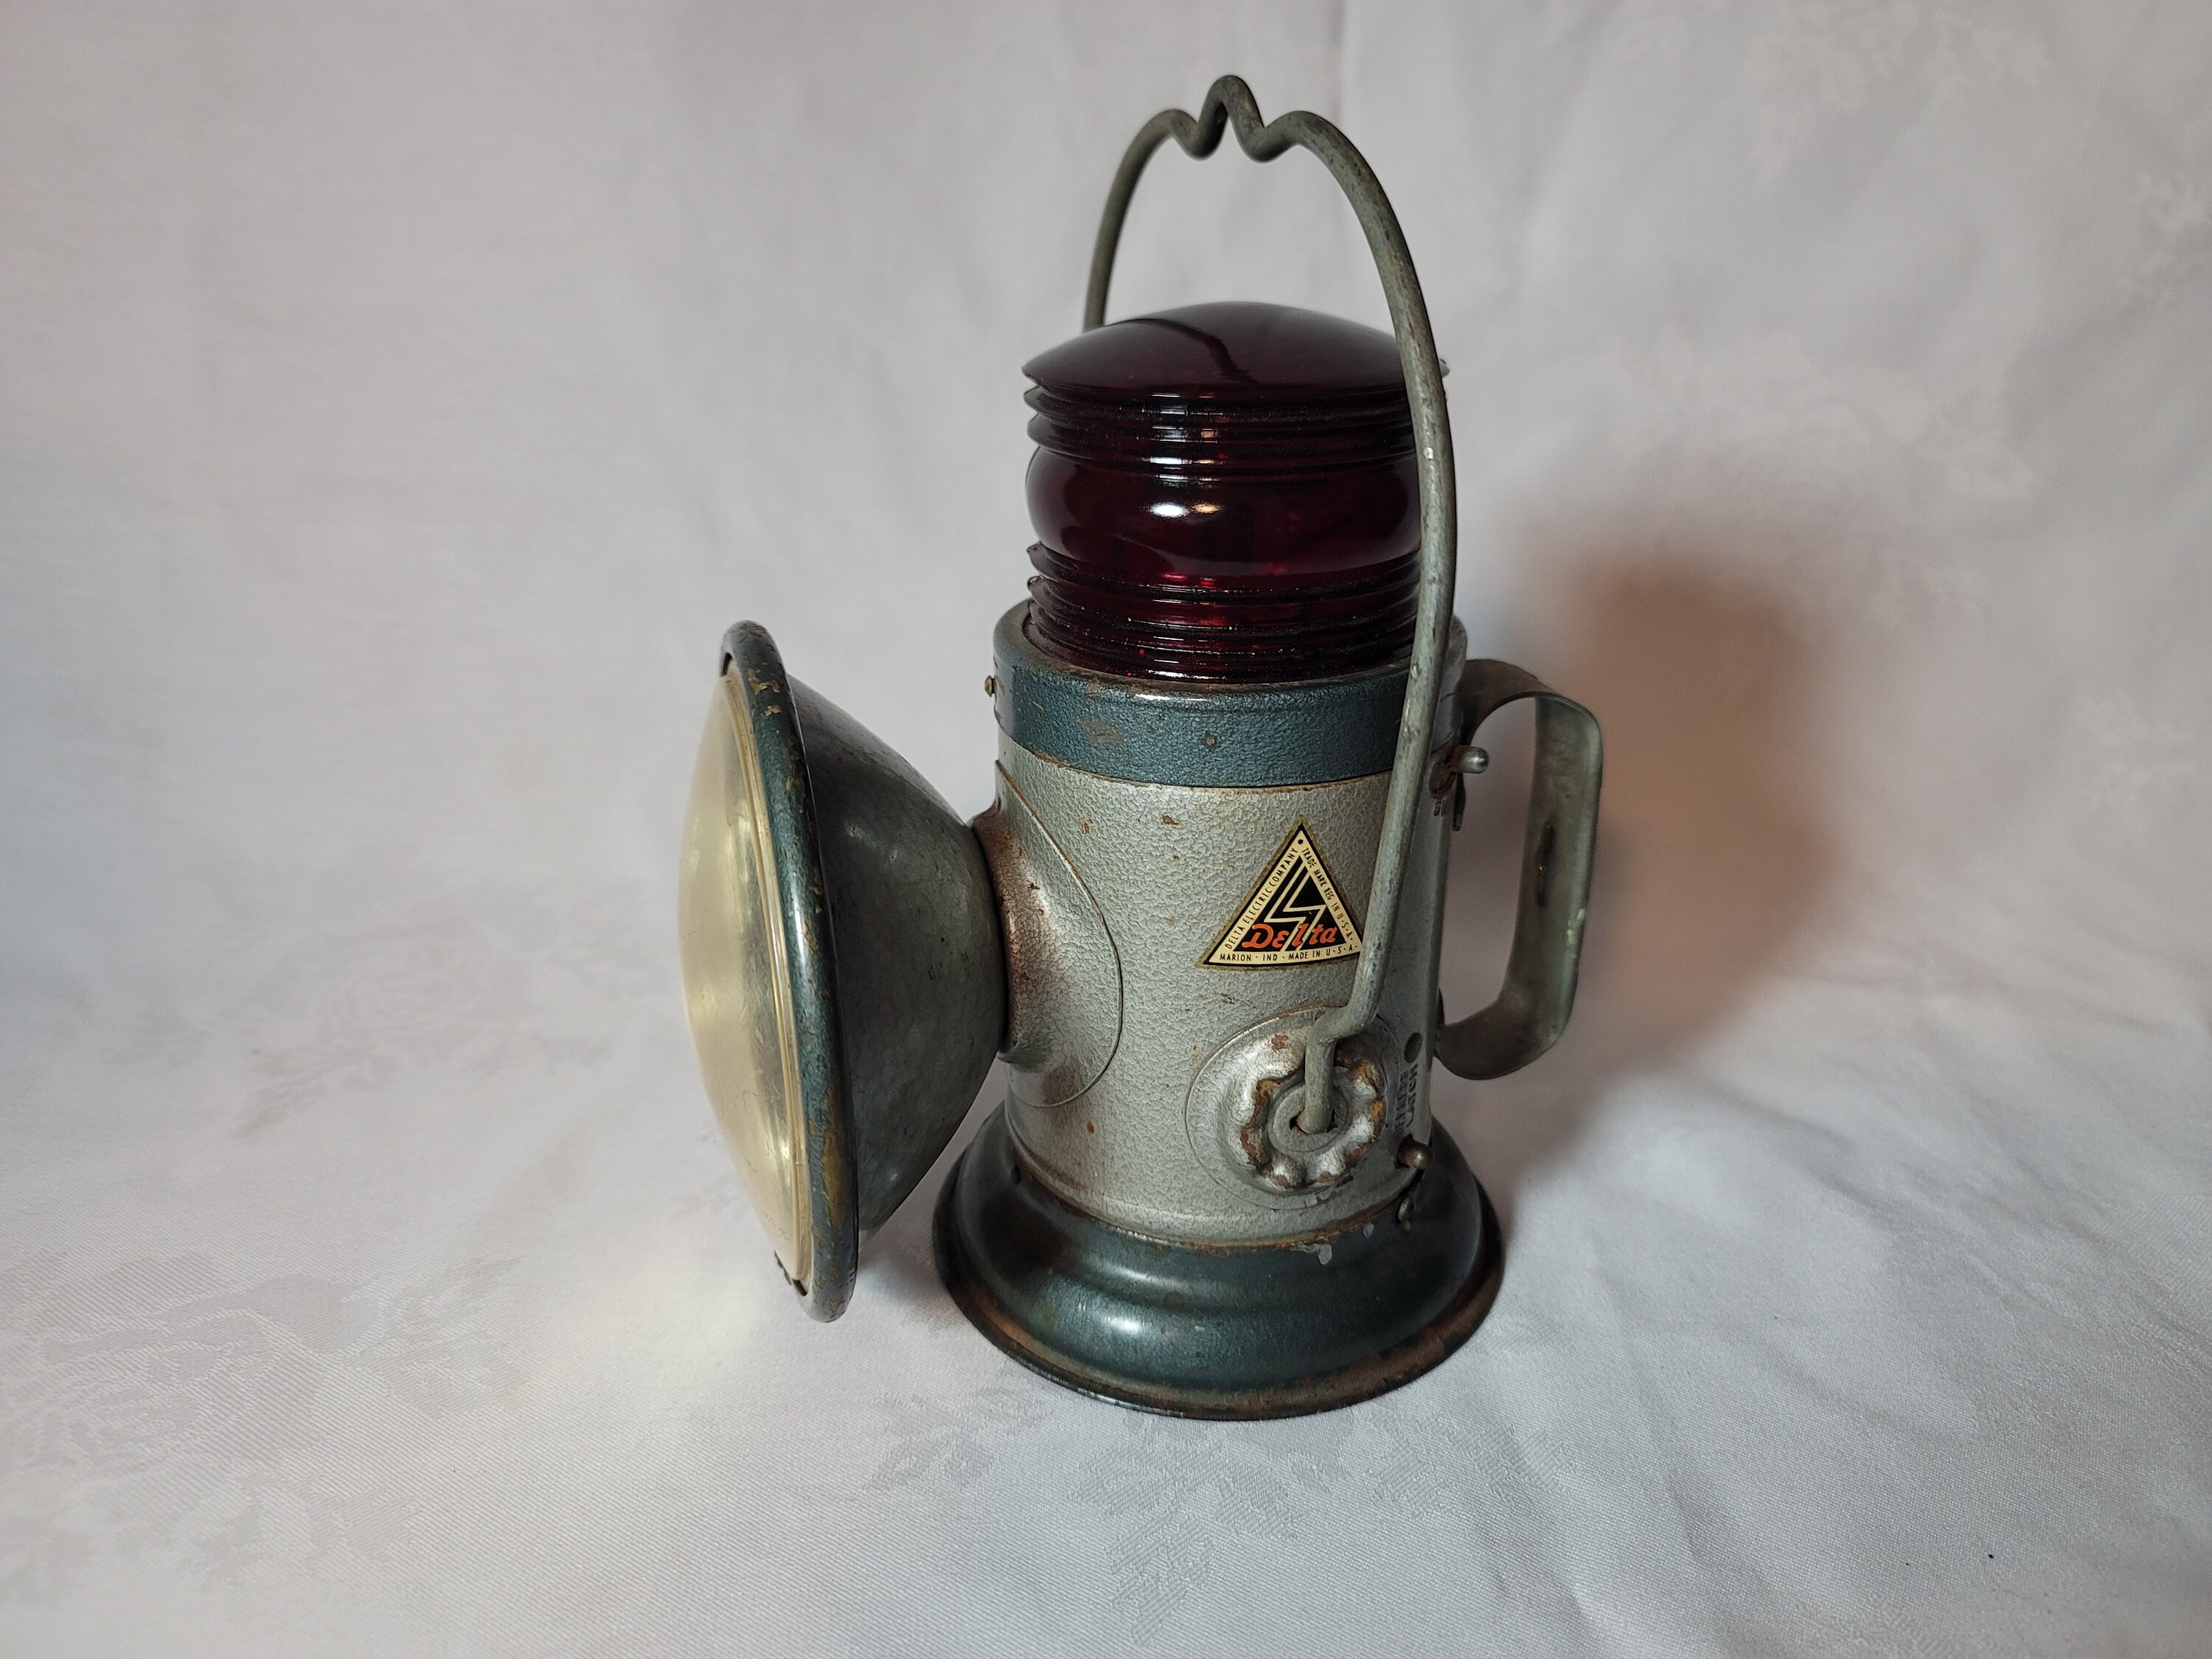 Vintage Delta Powerlite Lantern Flashlight and Dome Light Untested